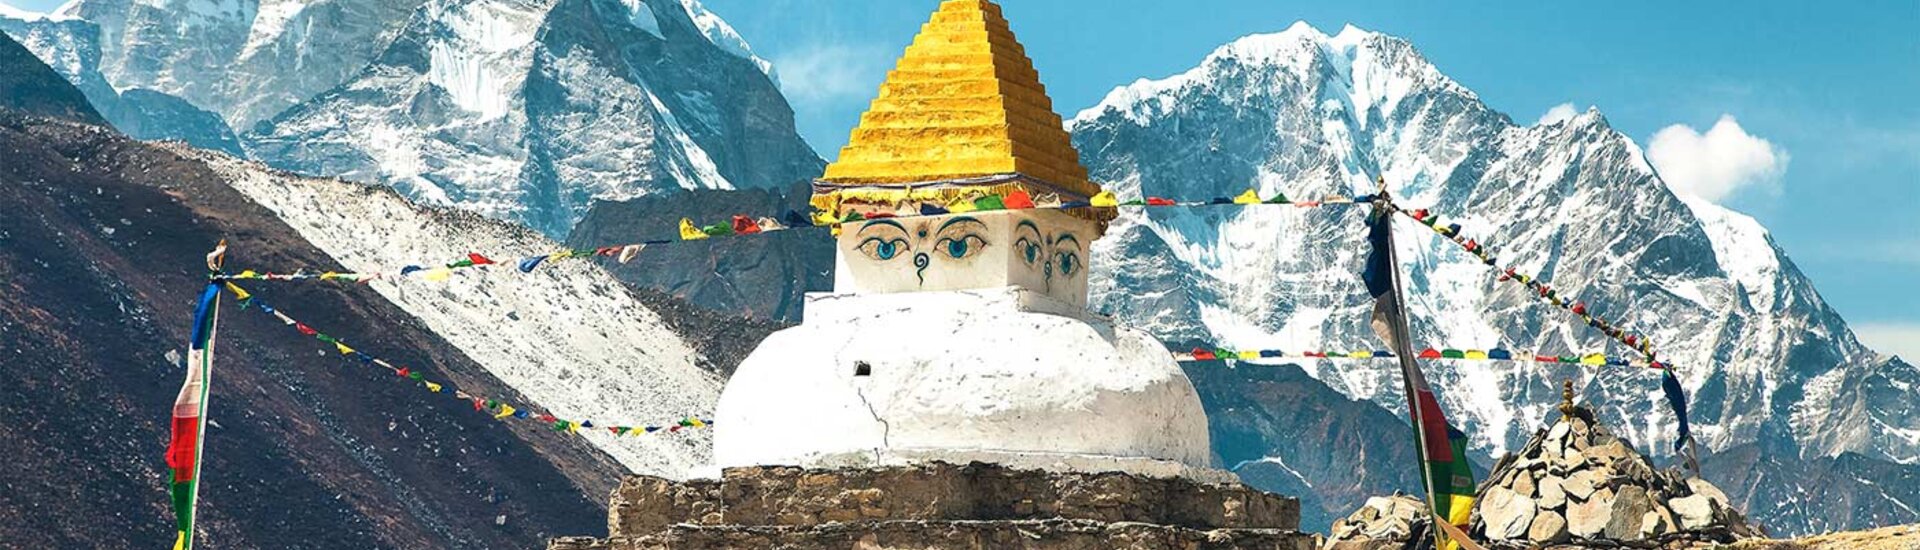 Dingboche: Stupa im Khumbu Tal